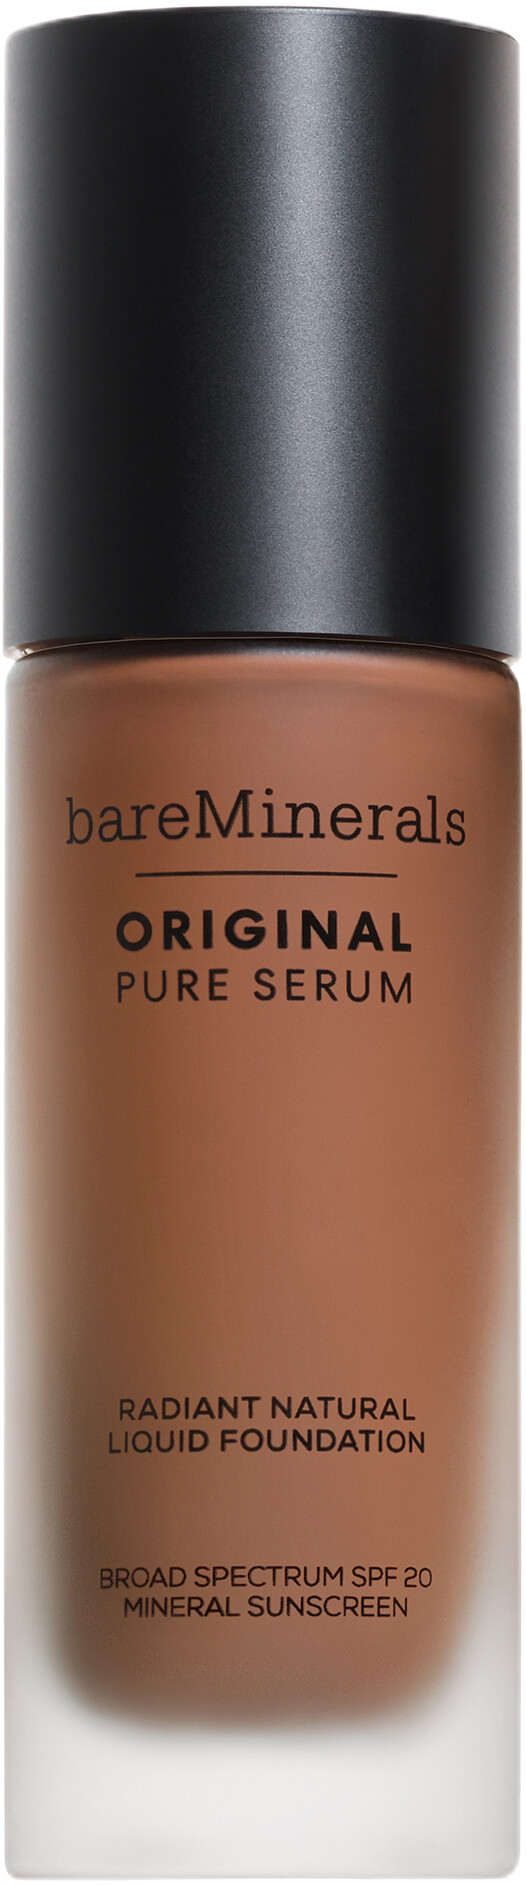 bareMinerals Original Pure Serum Radiant Natural Liquid Foundation SPF20 30ml 5 - Deep Cool